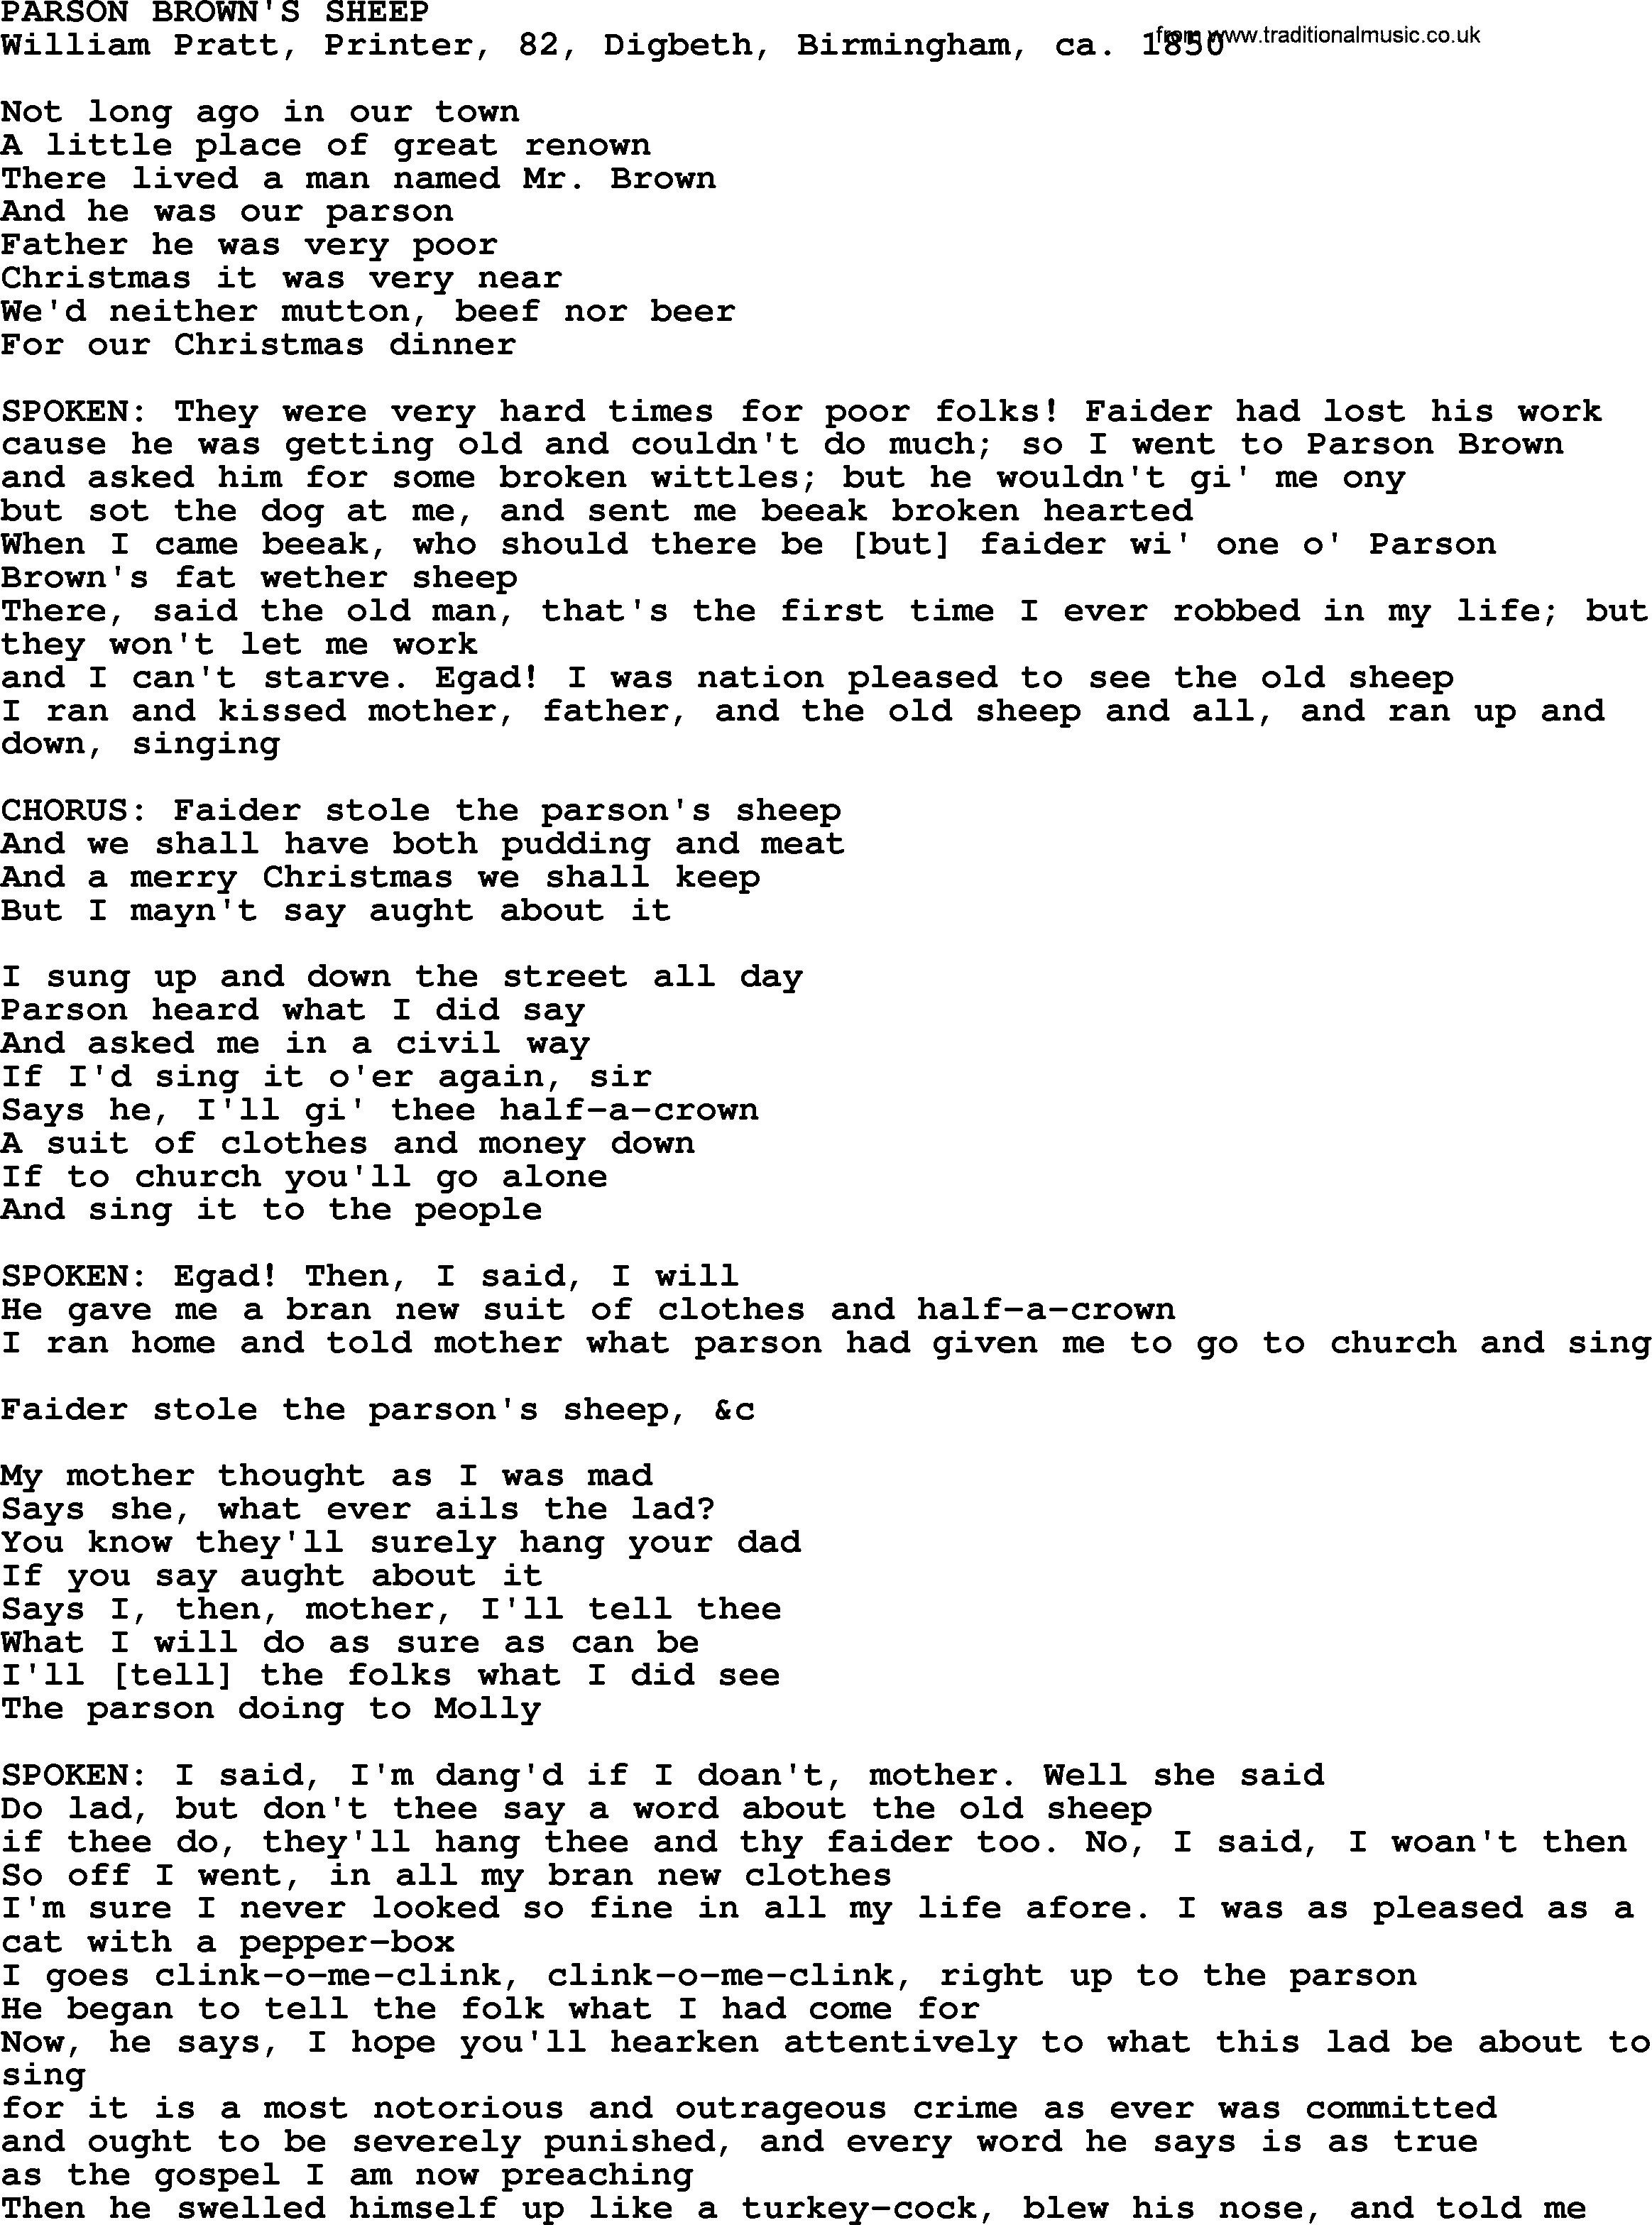 The Byrds song Parson Brown's Sheep, lyrics